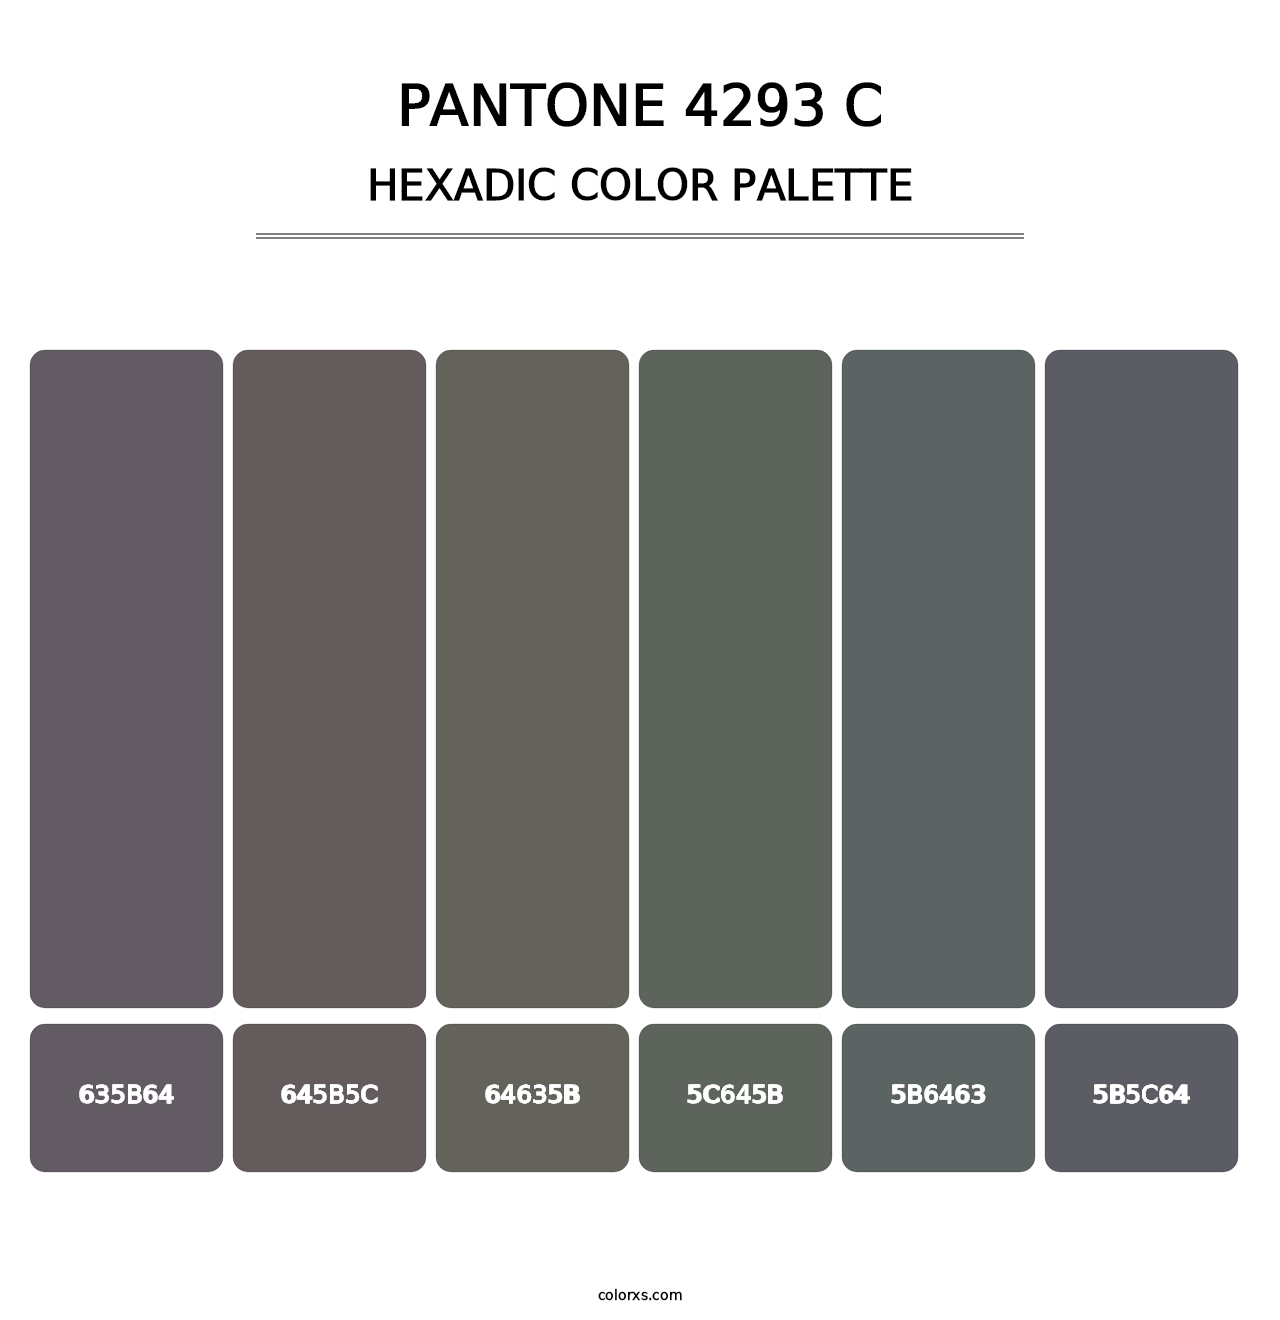 PANTONE 4293 C - Hexadic Color Palette